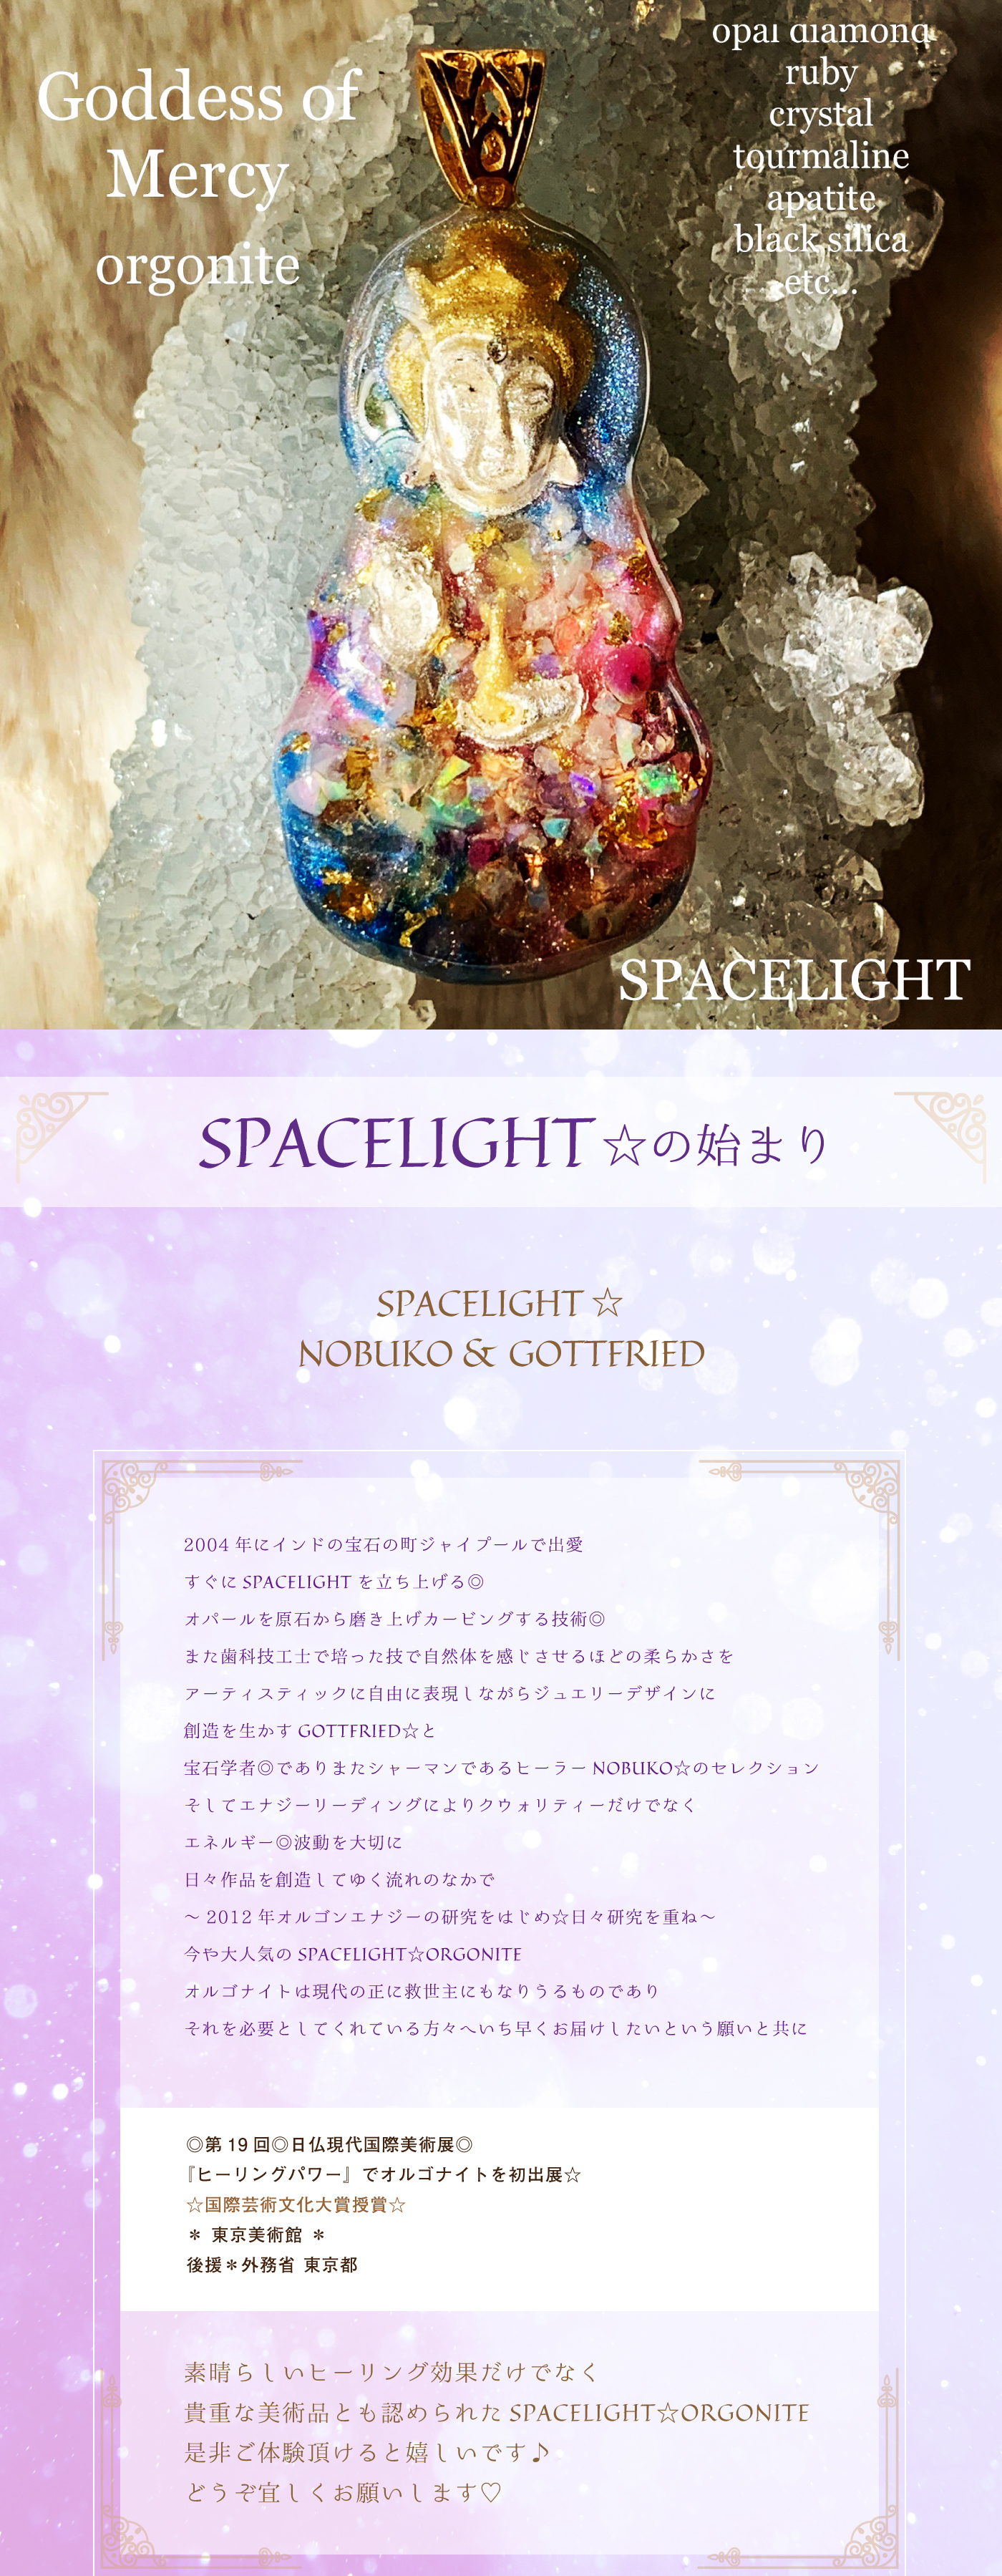 SPACELIGHT☆のはじまり SPACELIGHT☆ NOBUKO & GOTTFRIED